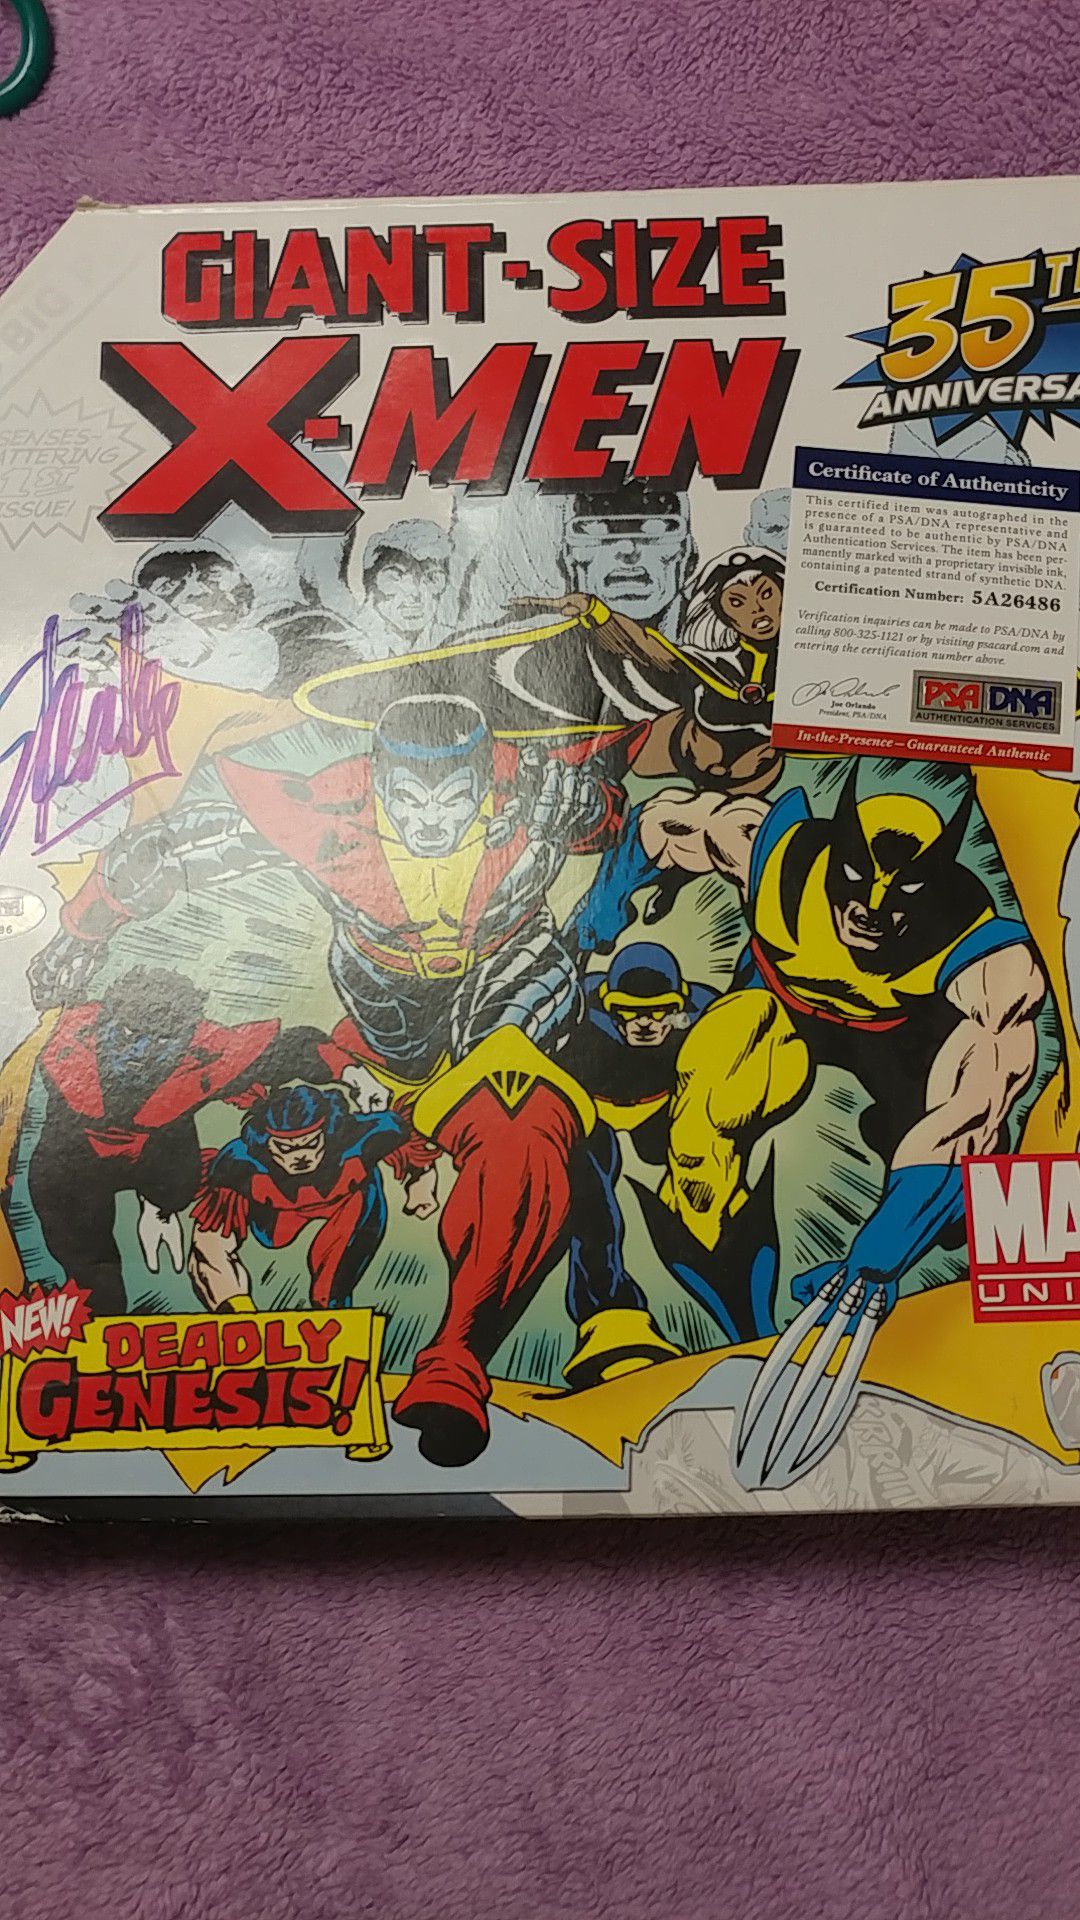 Stan Lee Autographed Giant Size X-men 35th anniversary action figures